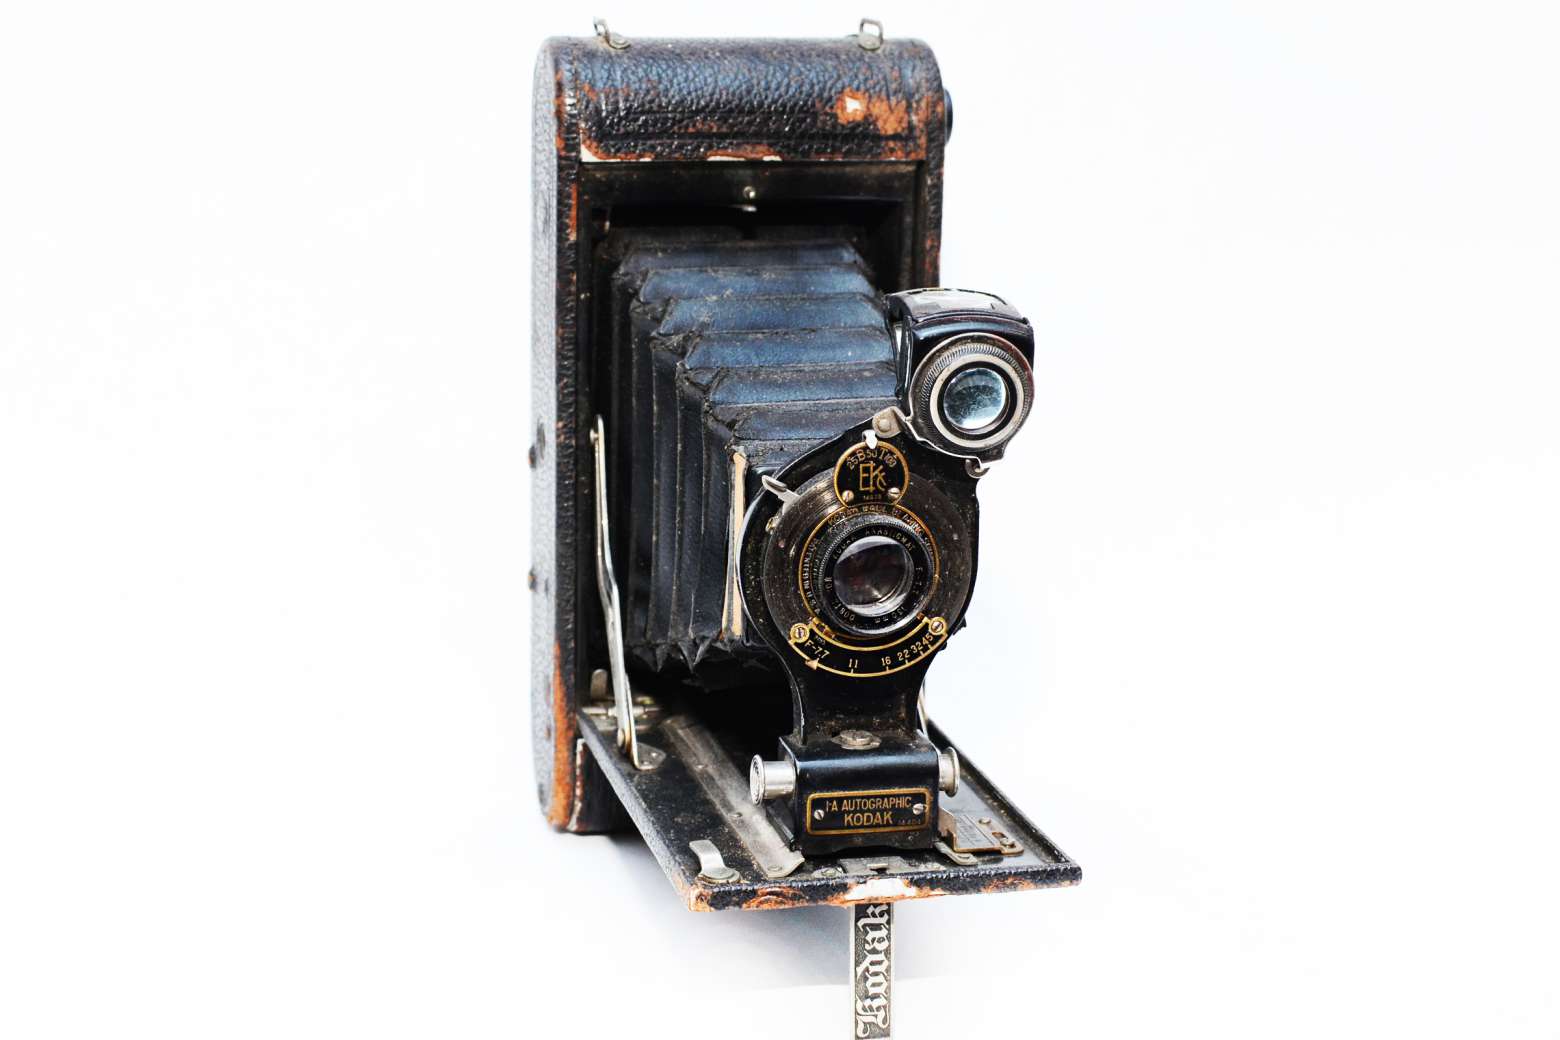 Photo of No. 1A AUTOGRAPHIC KODAK 1917 Model Camera